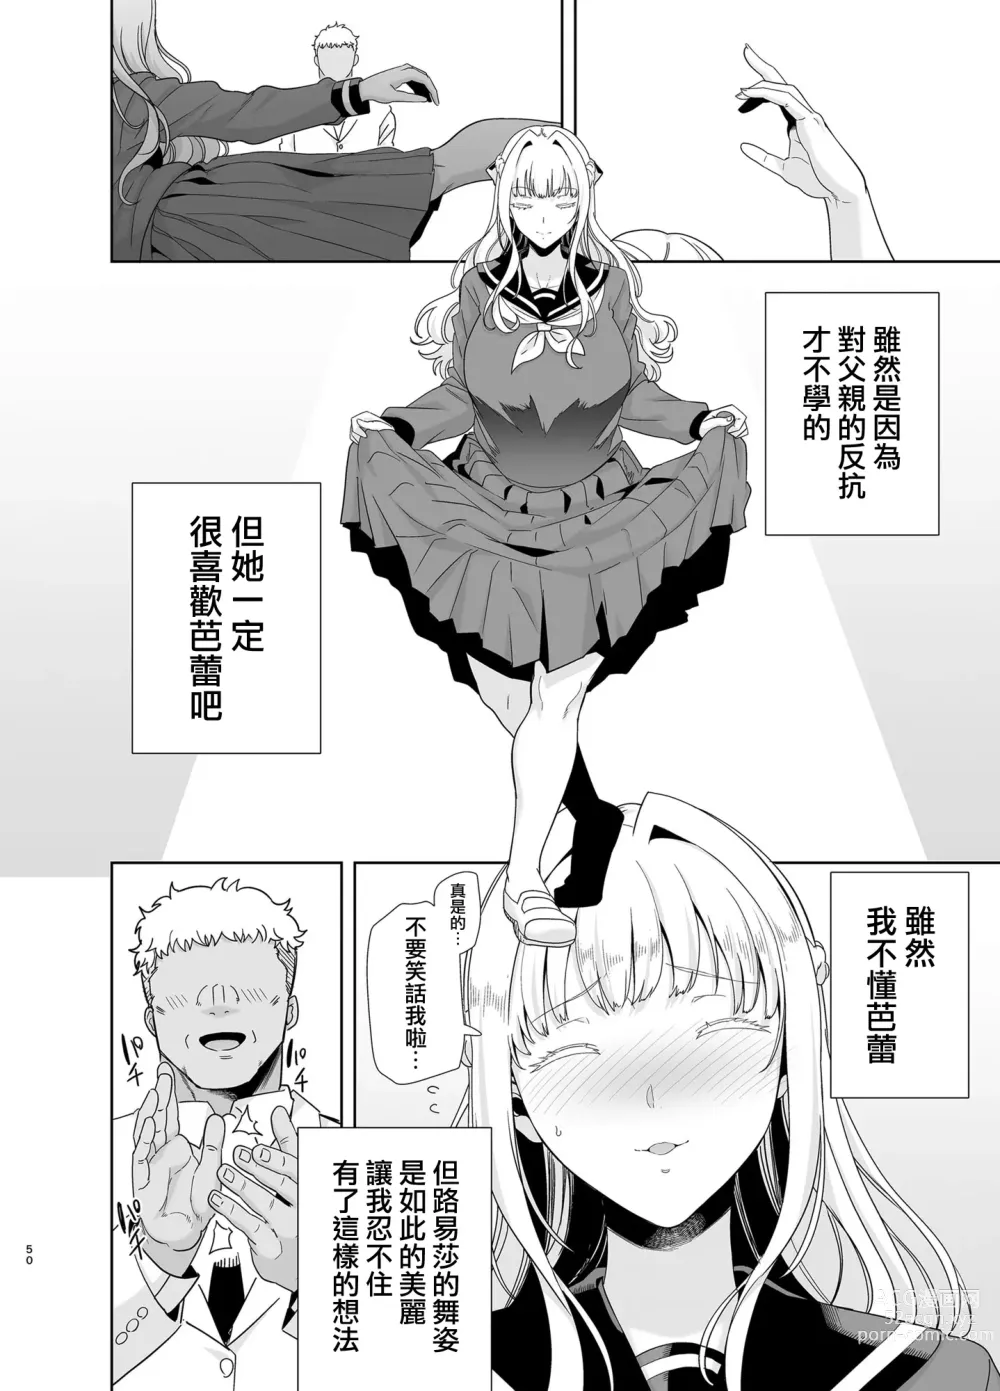 Page 49 of manga 聖華女学院高等部公認竿おじさん 5